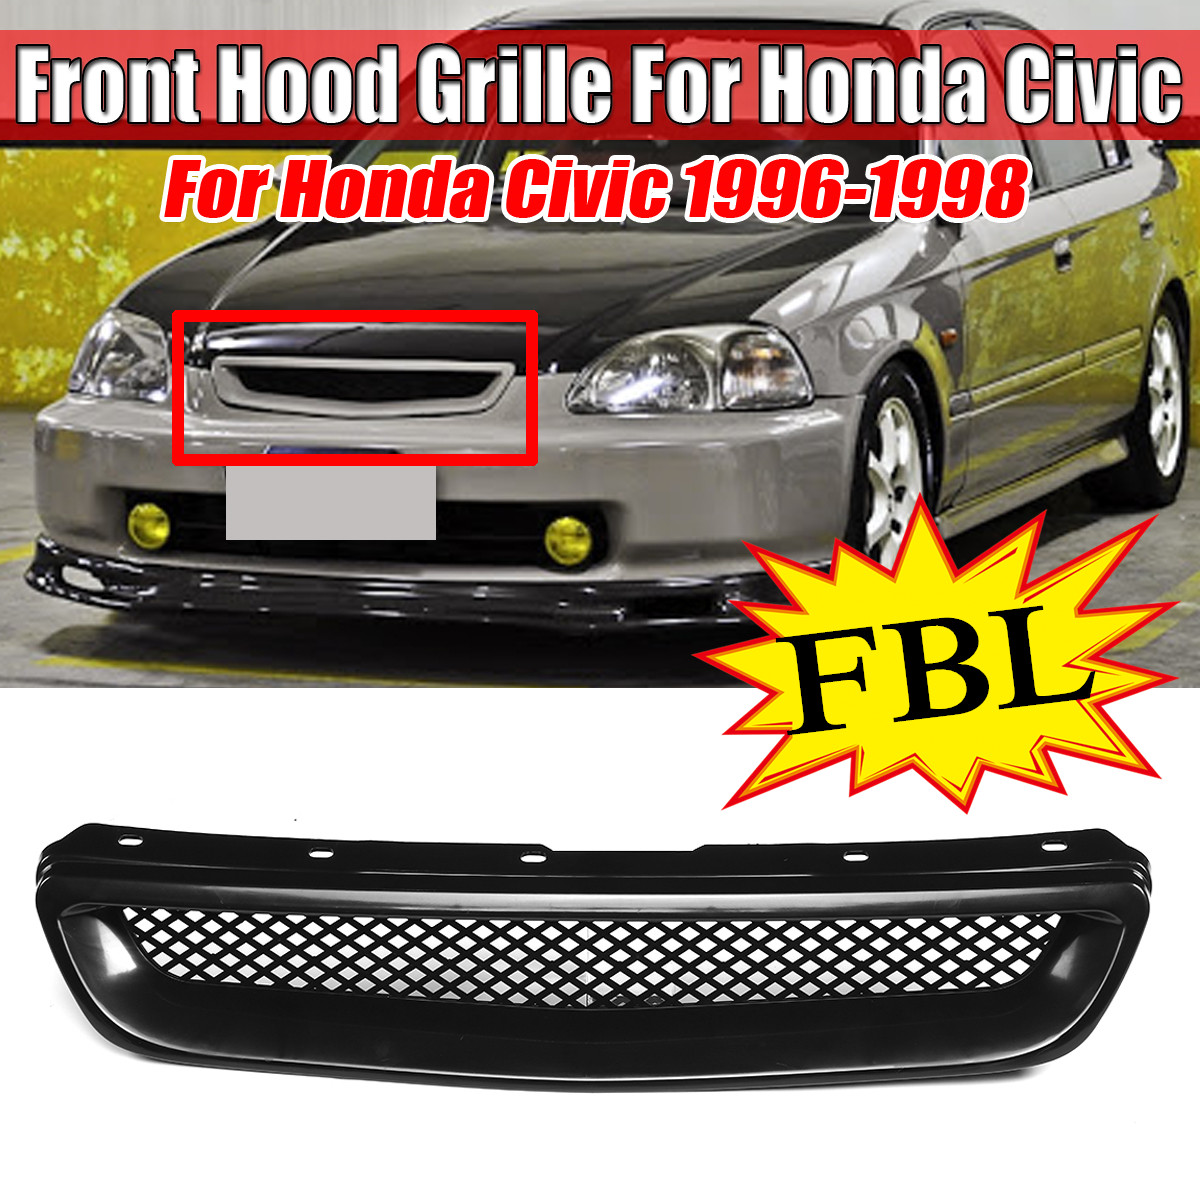 [Freebang] กระจังหน้าแต่ง Honda civic 1996-1998 กระจังหน้า อุปกรณ์แต่งรถ ของแต่งรถ